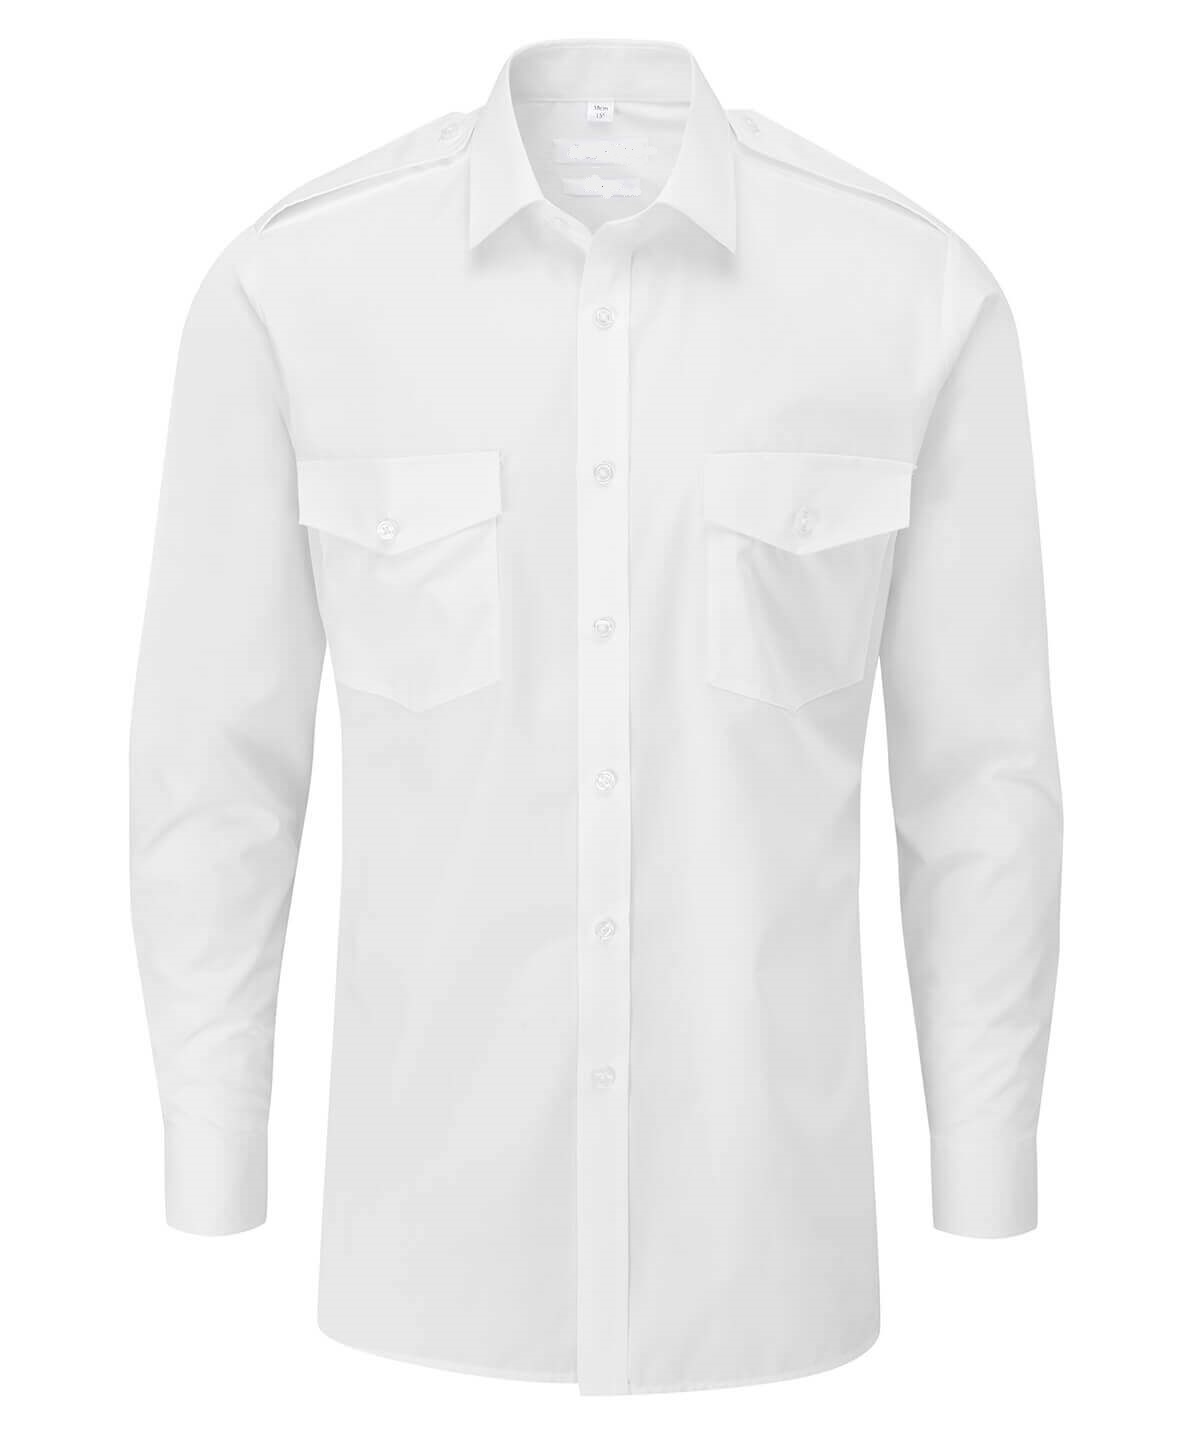 White Uniform Full Shirt With Both Side Pocket Flaps